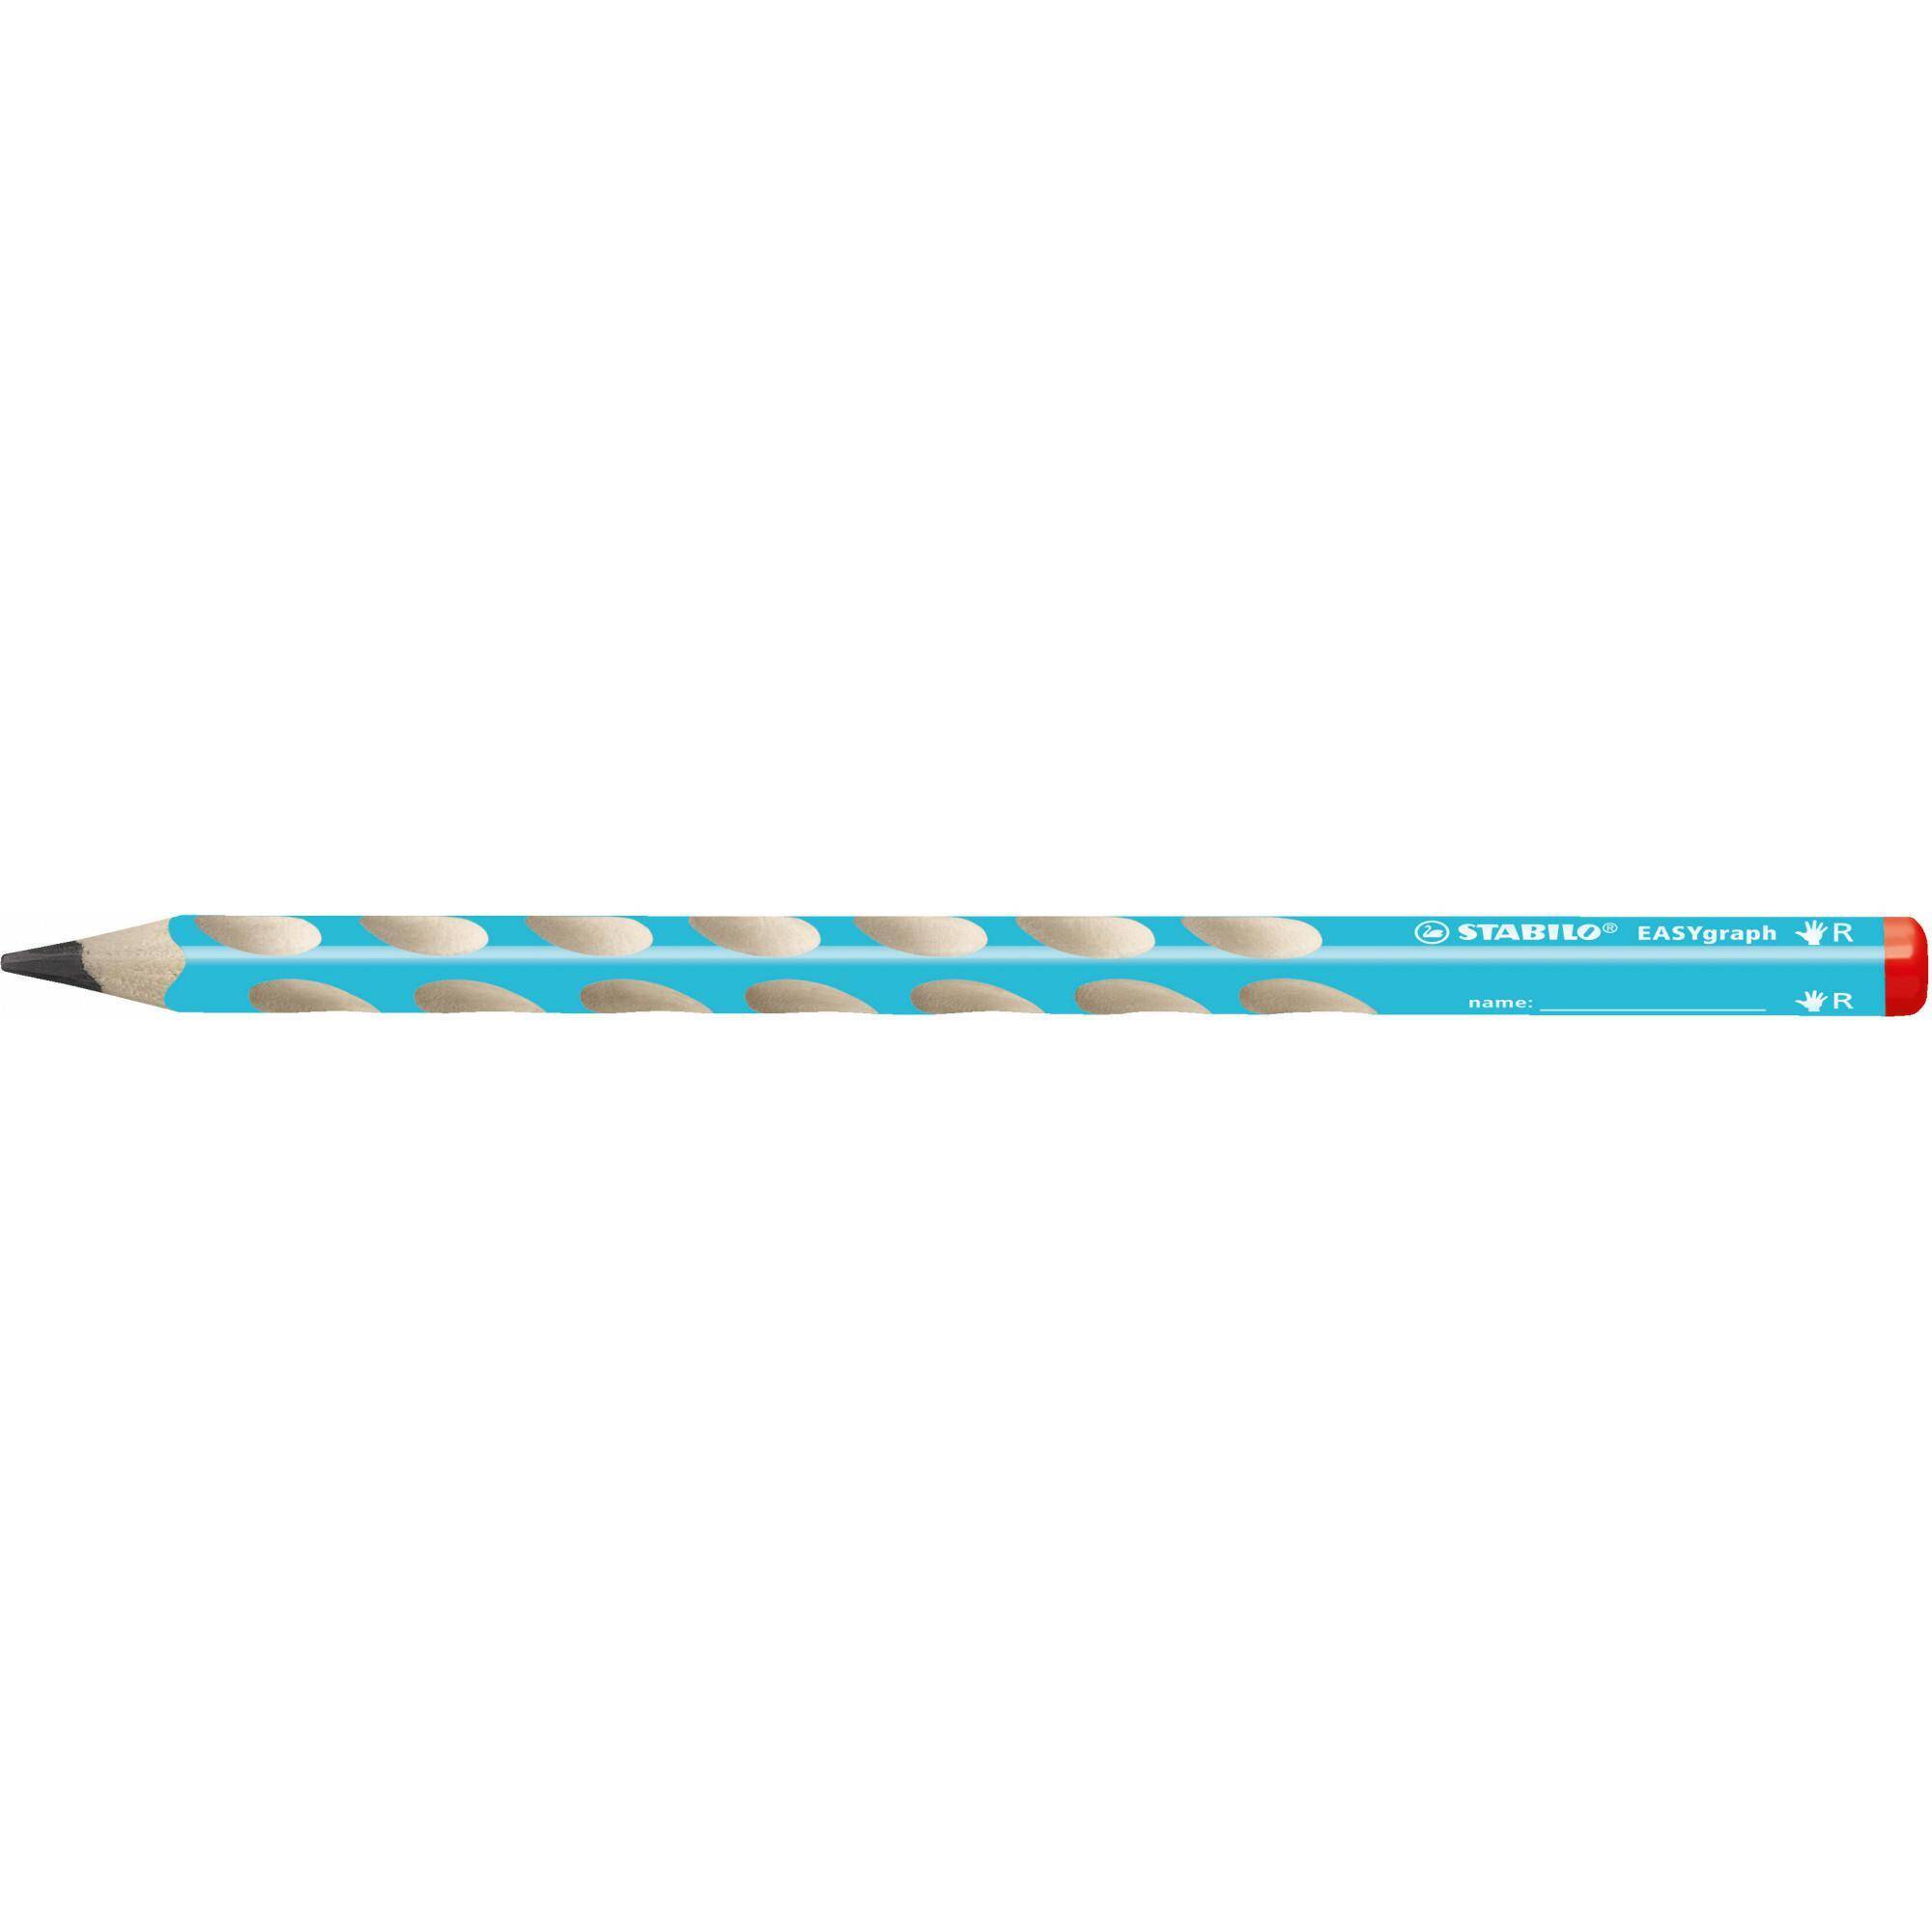 Ołówek Easygraph 2B niebieski